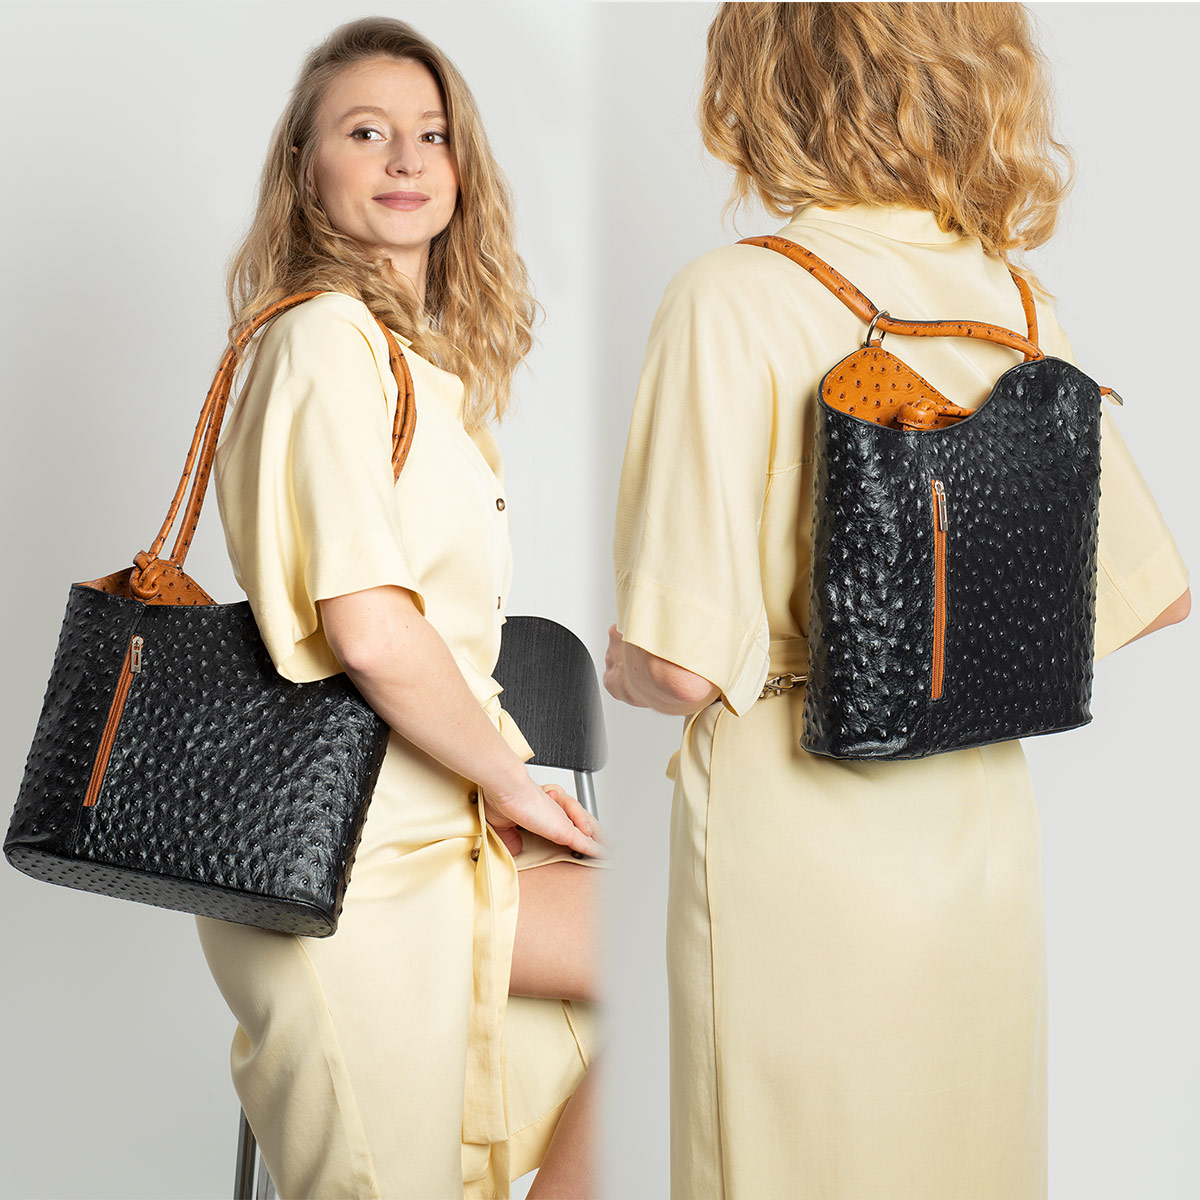 Fioretta Italian Genuine Leather Ostrich Pattern Top Dual Handles Tote Shoulder Bag Backpack Handbag For Women - Black Brown